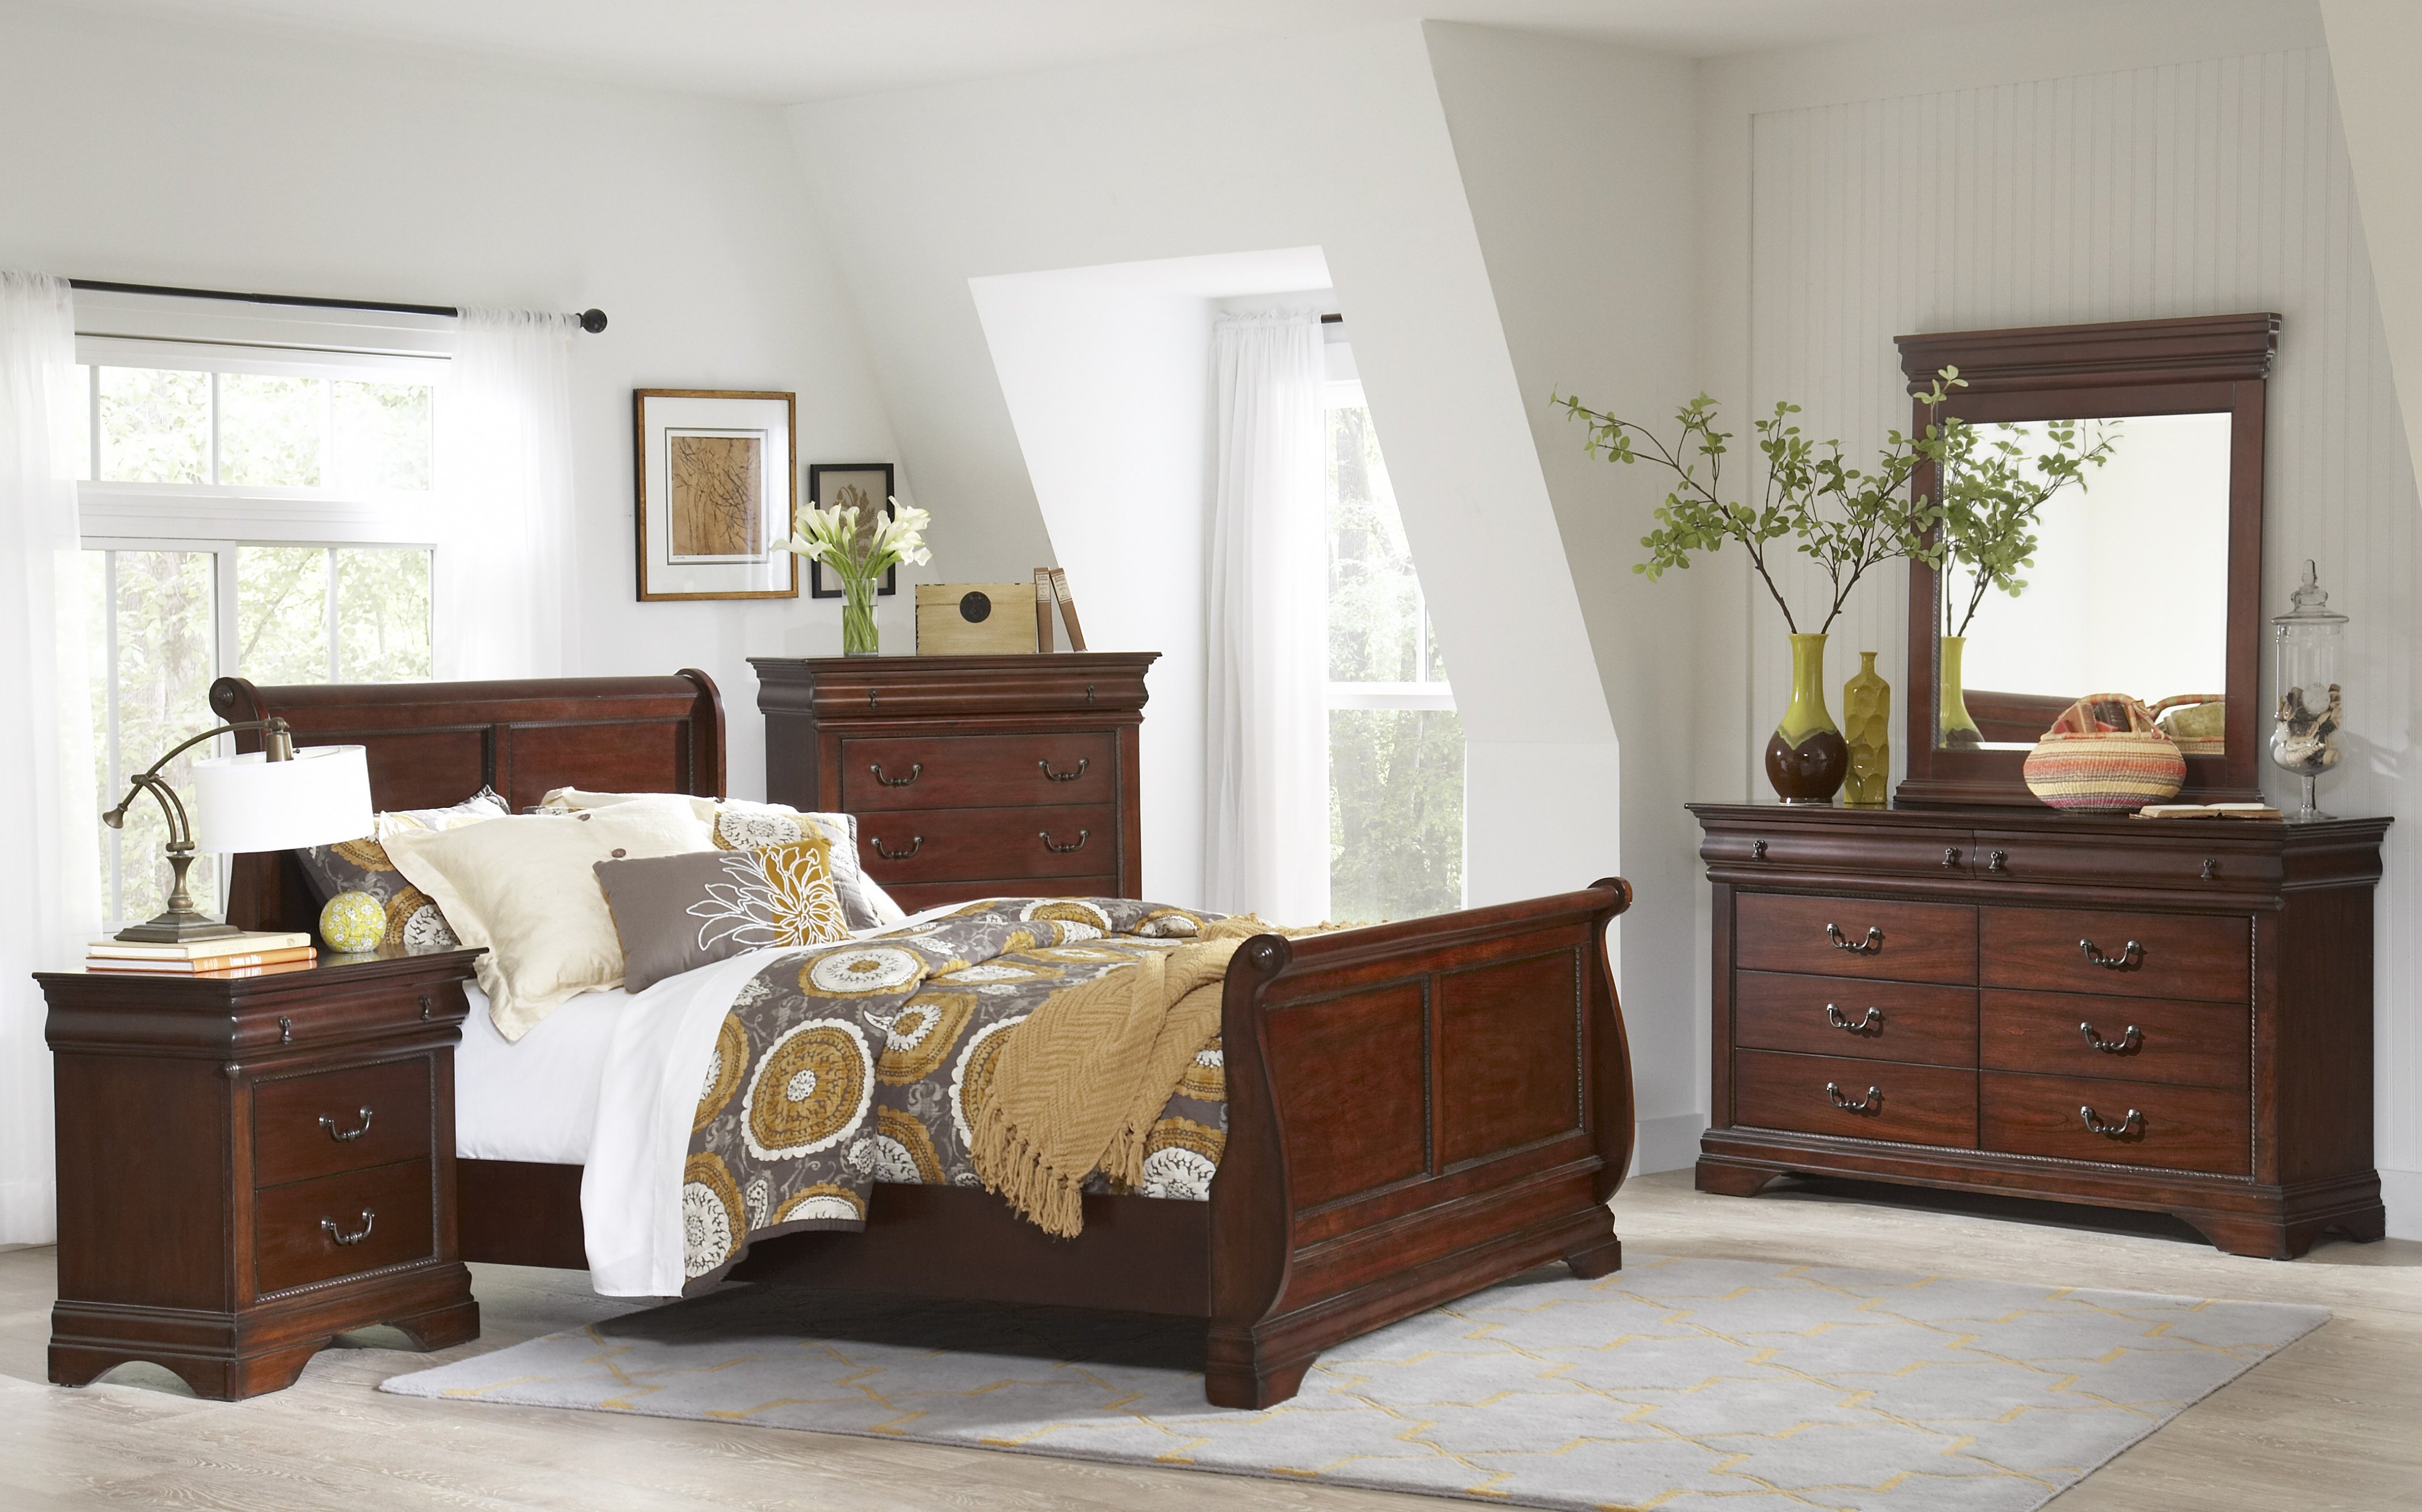 largo bordeaux bedroom furniture